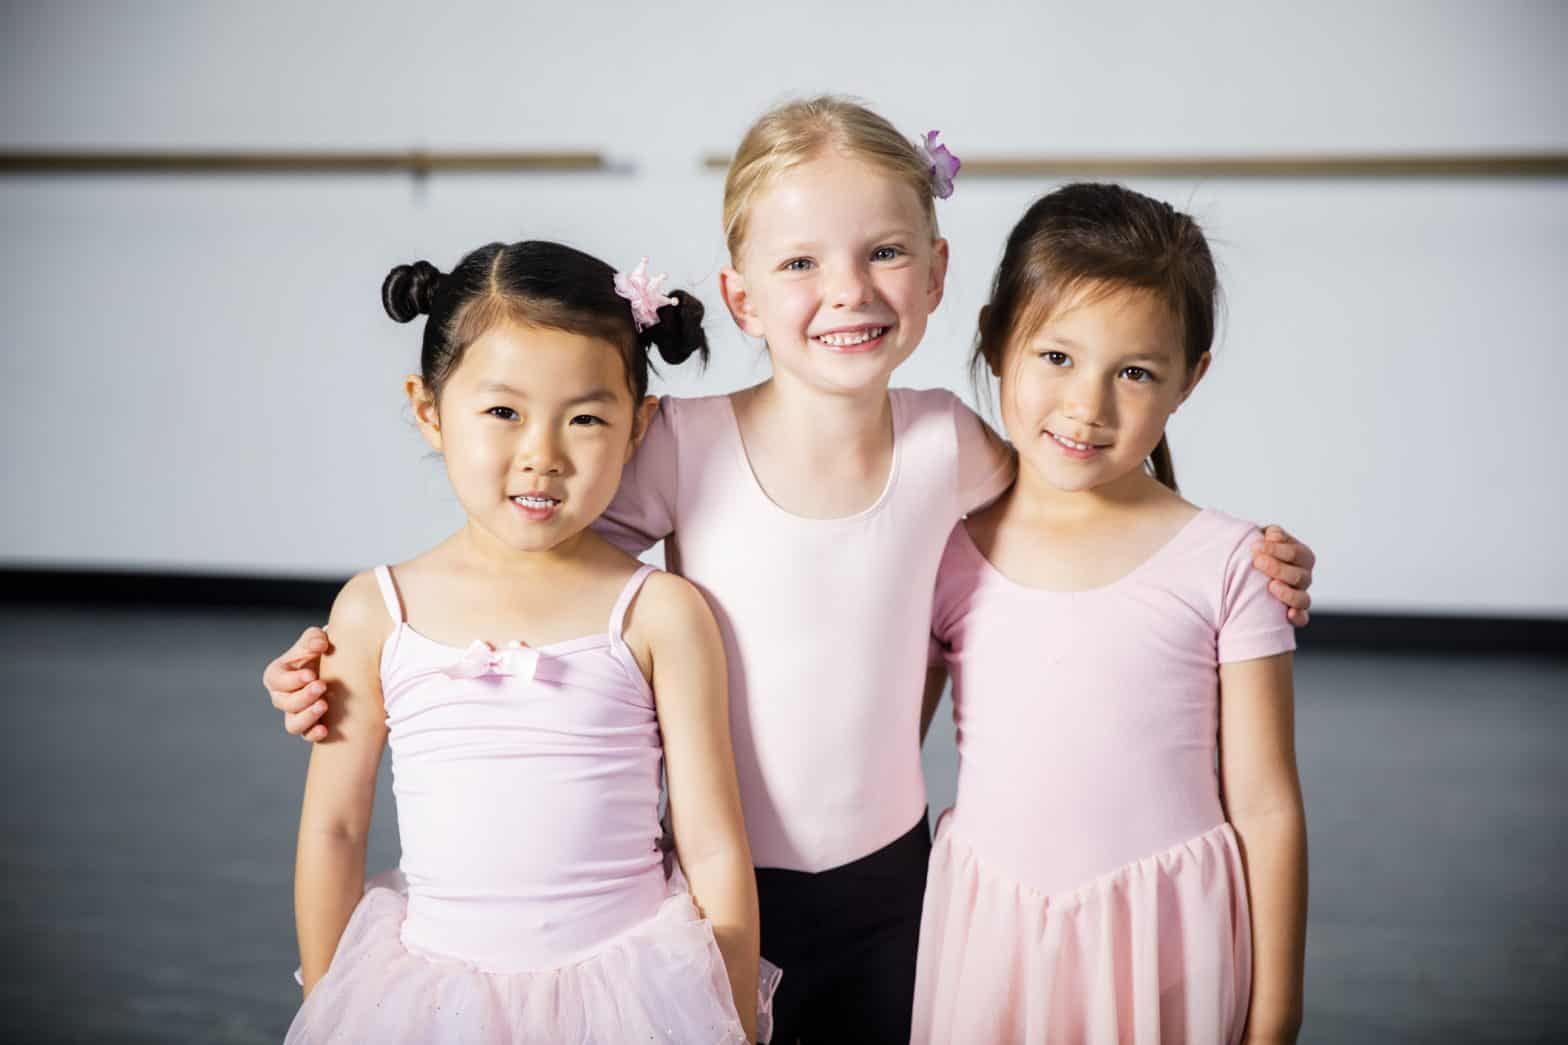 10 Ballet Classes in Singapore for Kids to Kickstart their Ballet Journey